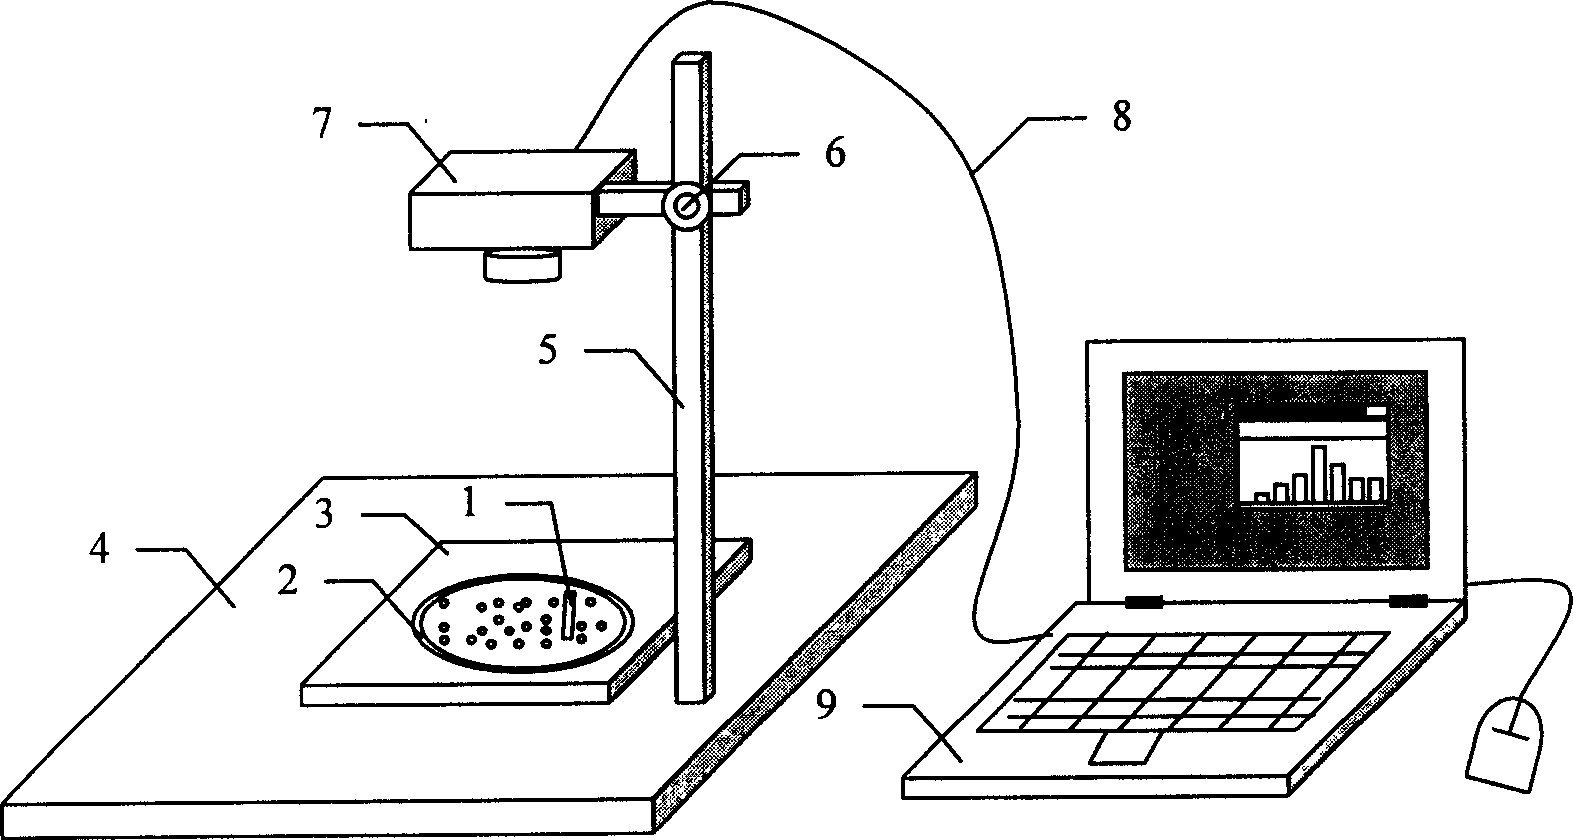 Method for measuring grain size distribution of granules